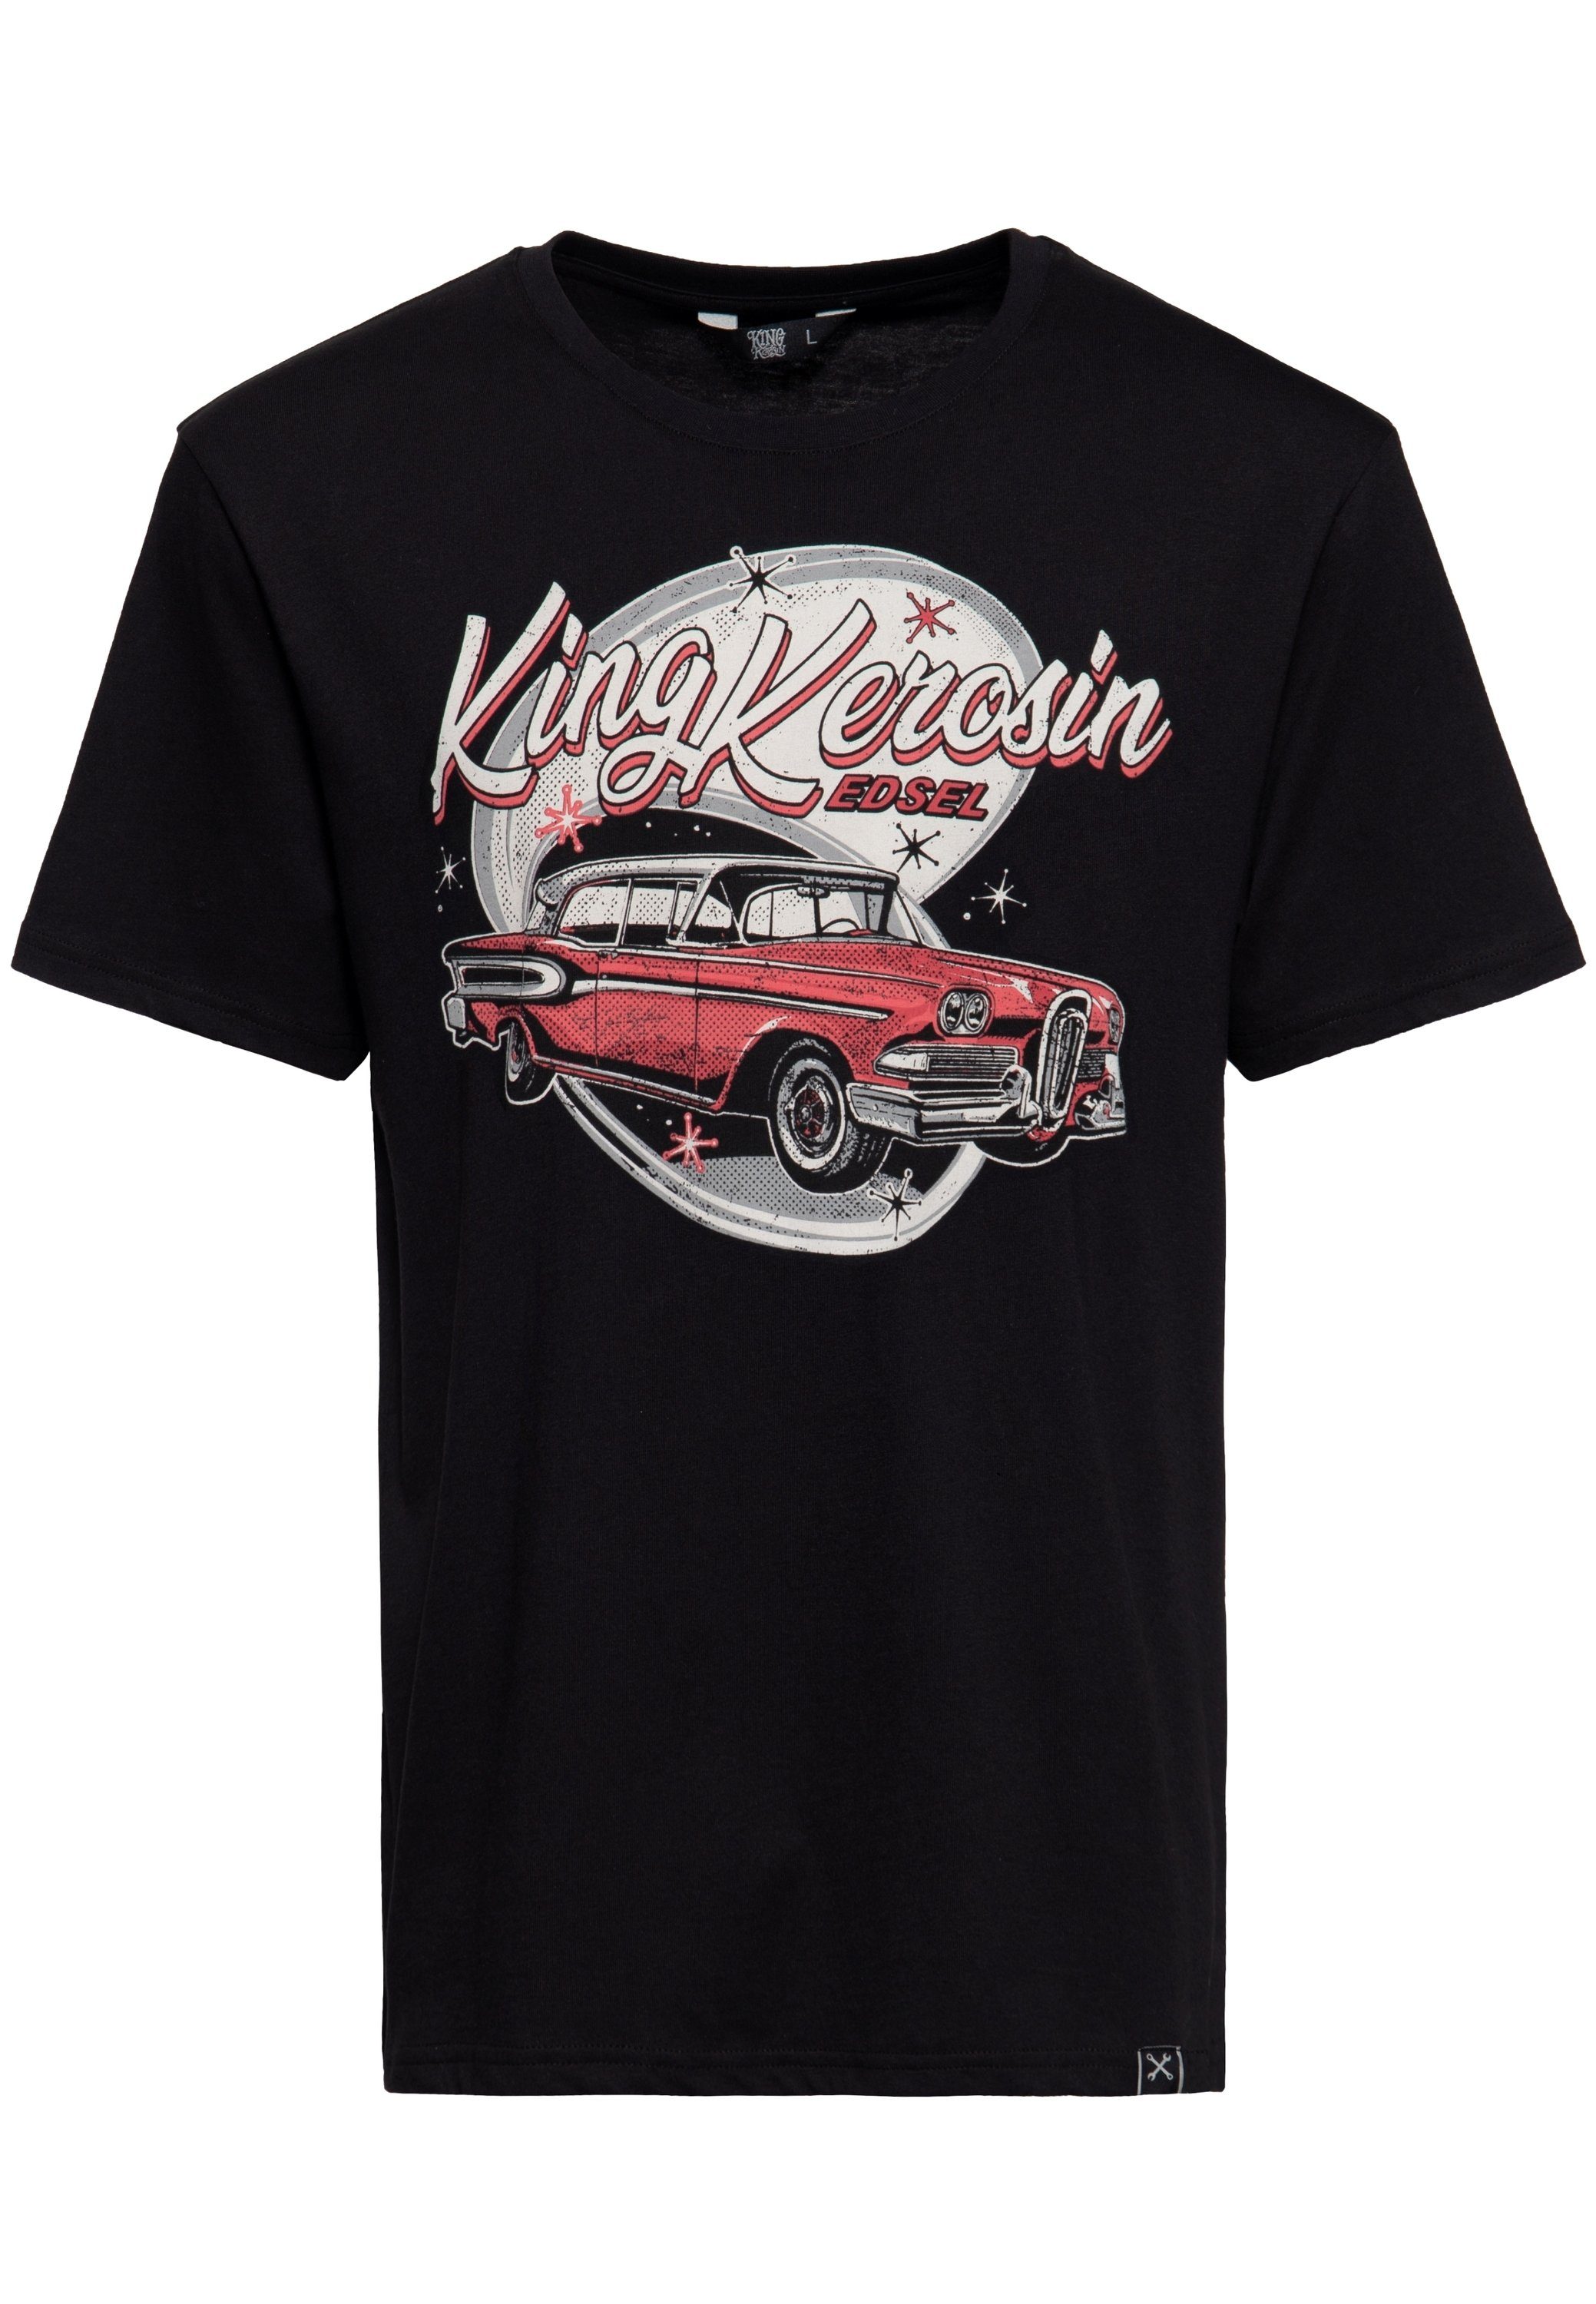 KingKerosin Print-Shirt Edsel mit Classic Car - Artwork schwarz